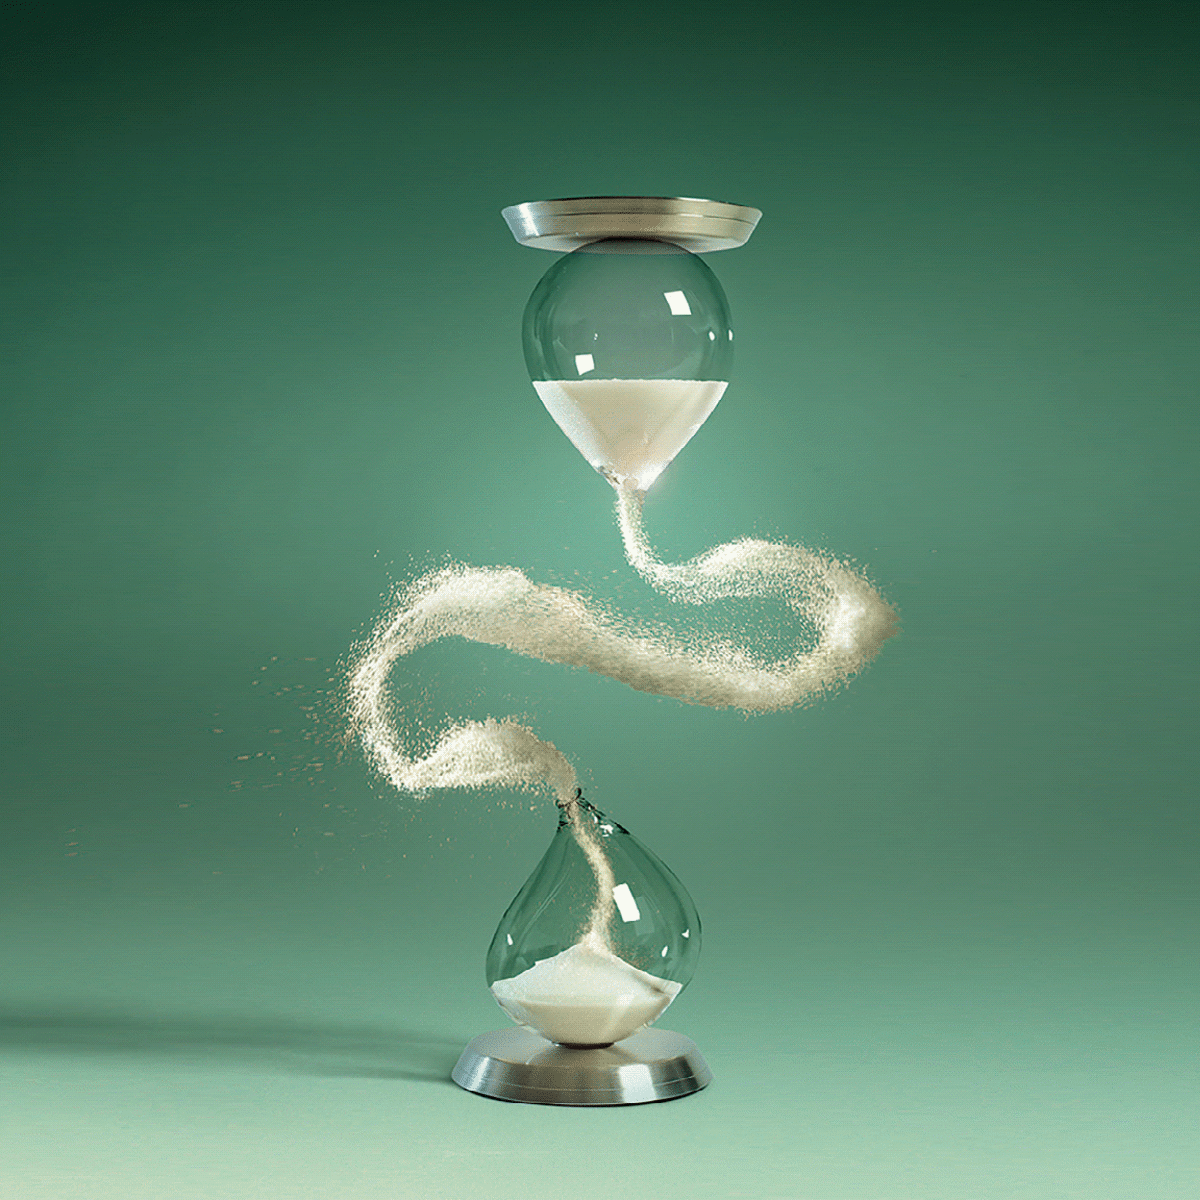 Sand through an hourglass